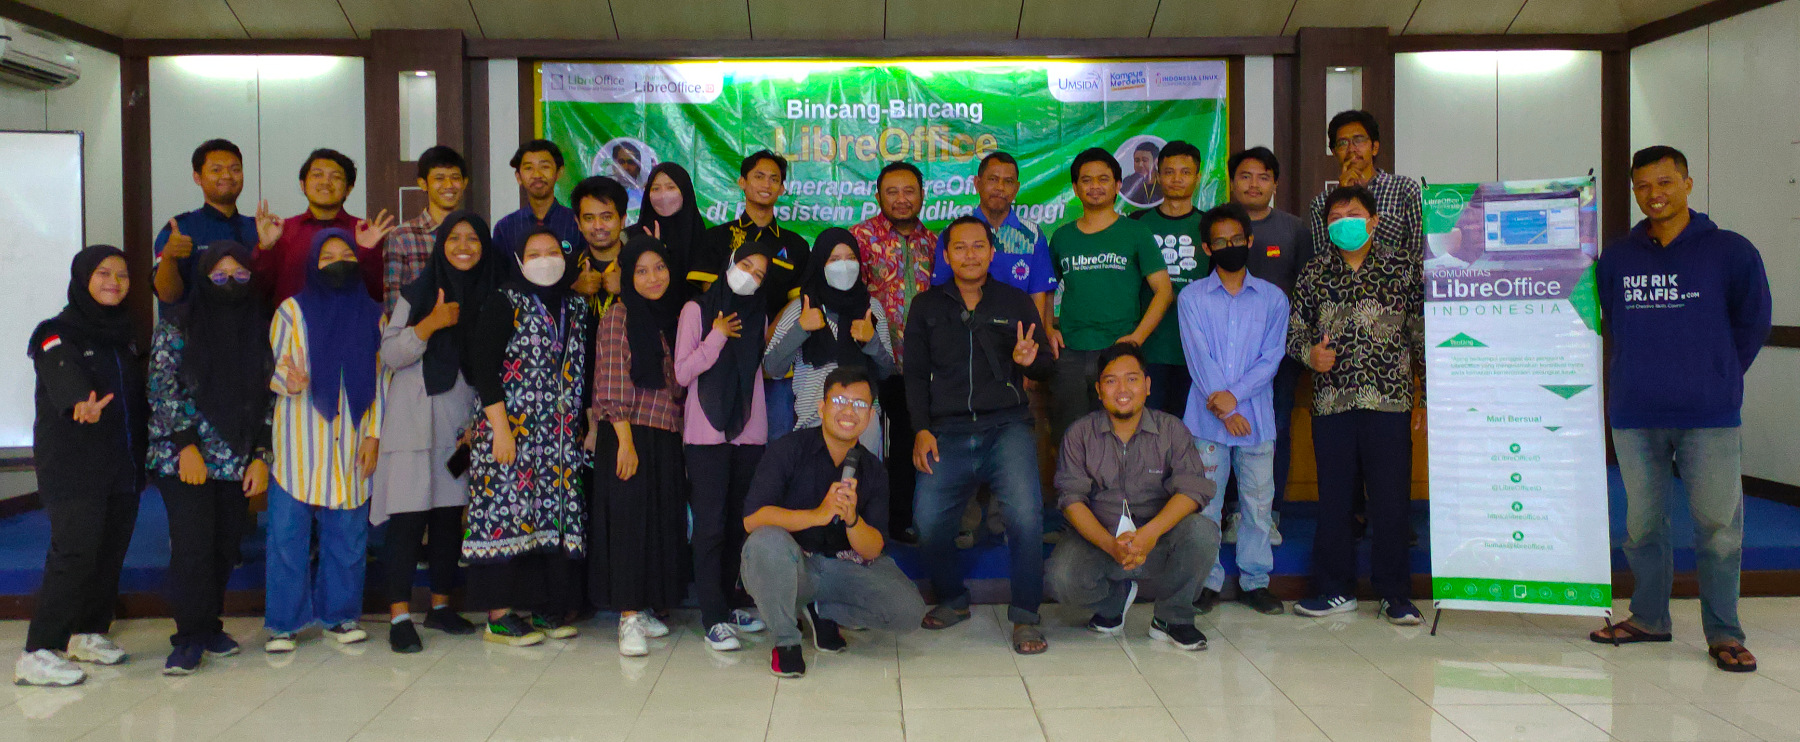 Indonesian community group photo